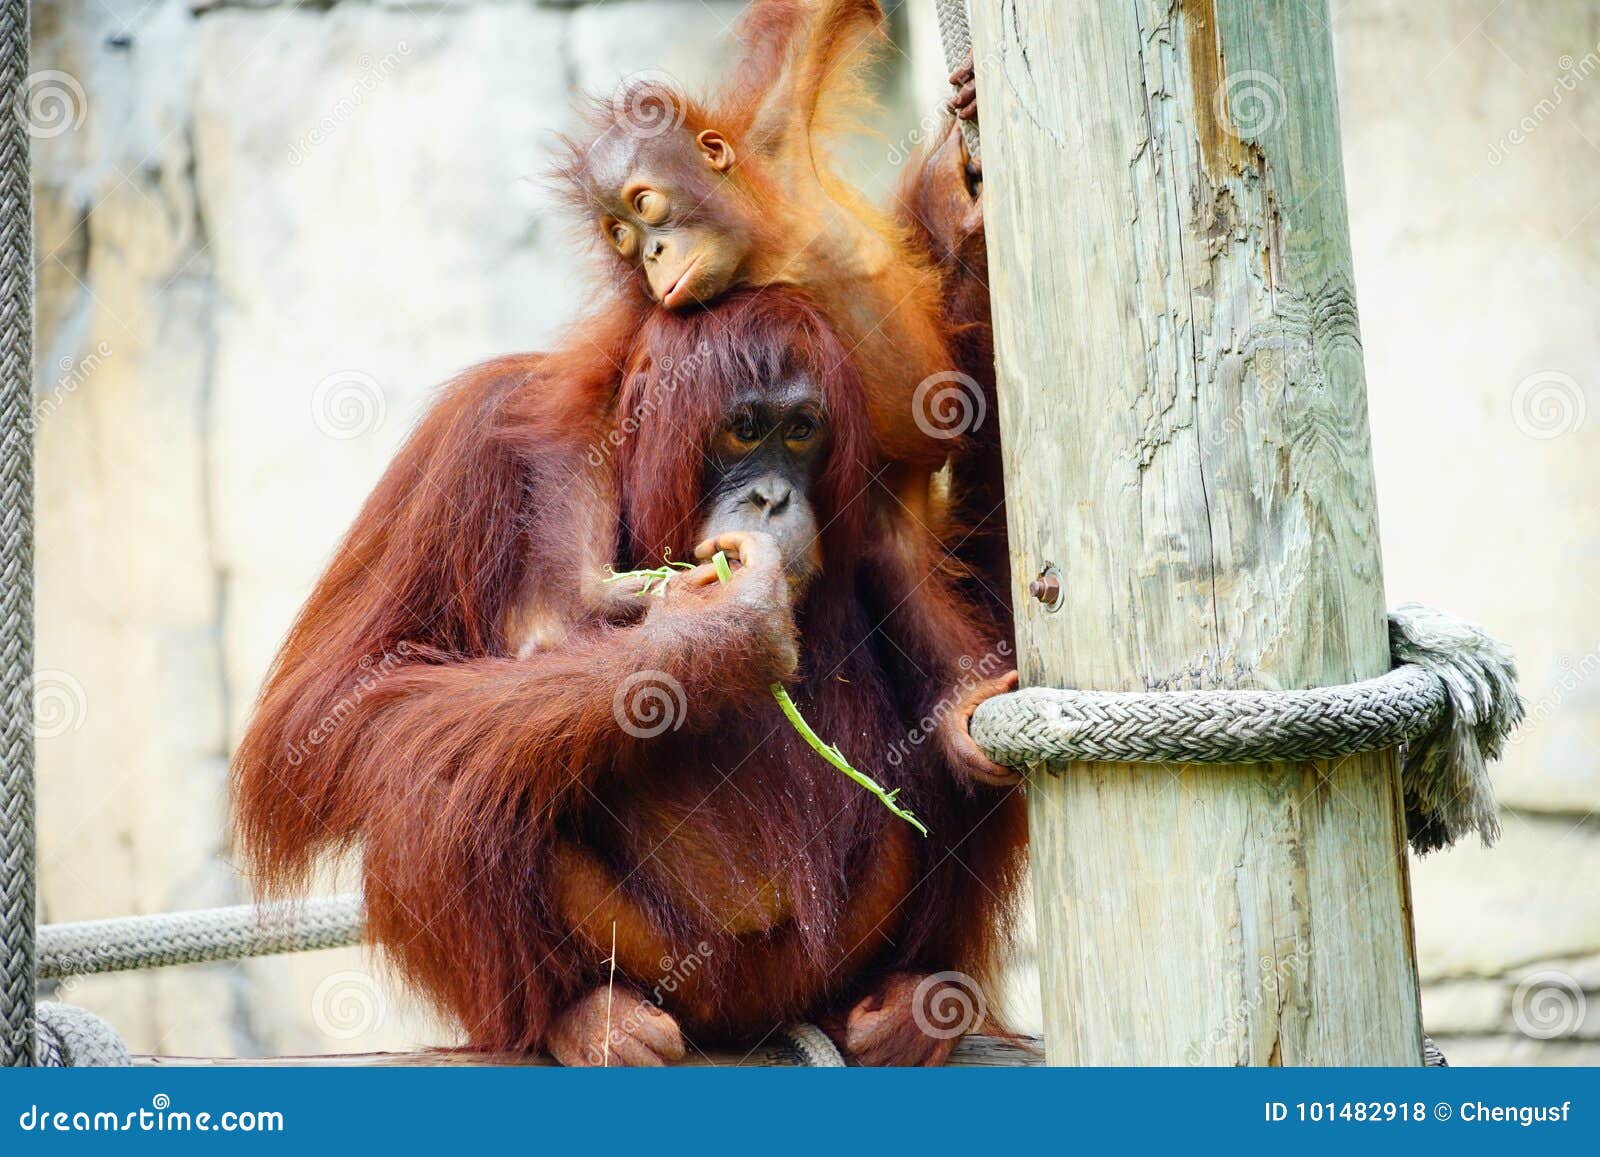 Download Mammal Orangutan Primate Ape And Her Baby Stock Photo - Image of taken, banner: 101482918